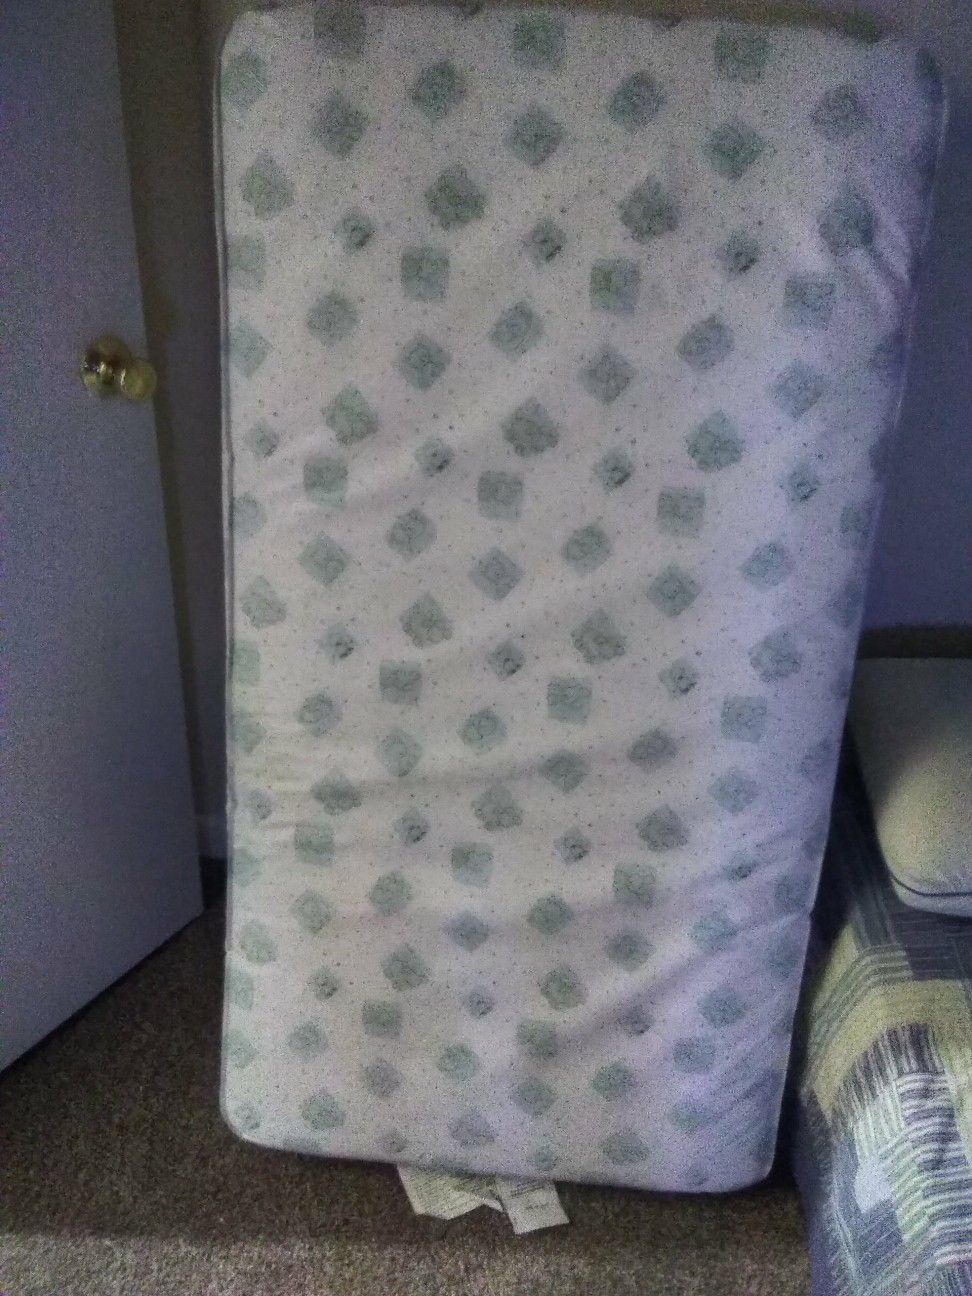 mattress for baby crib